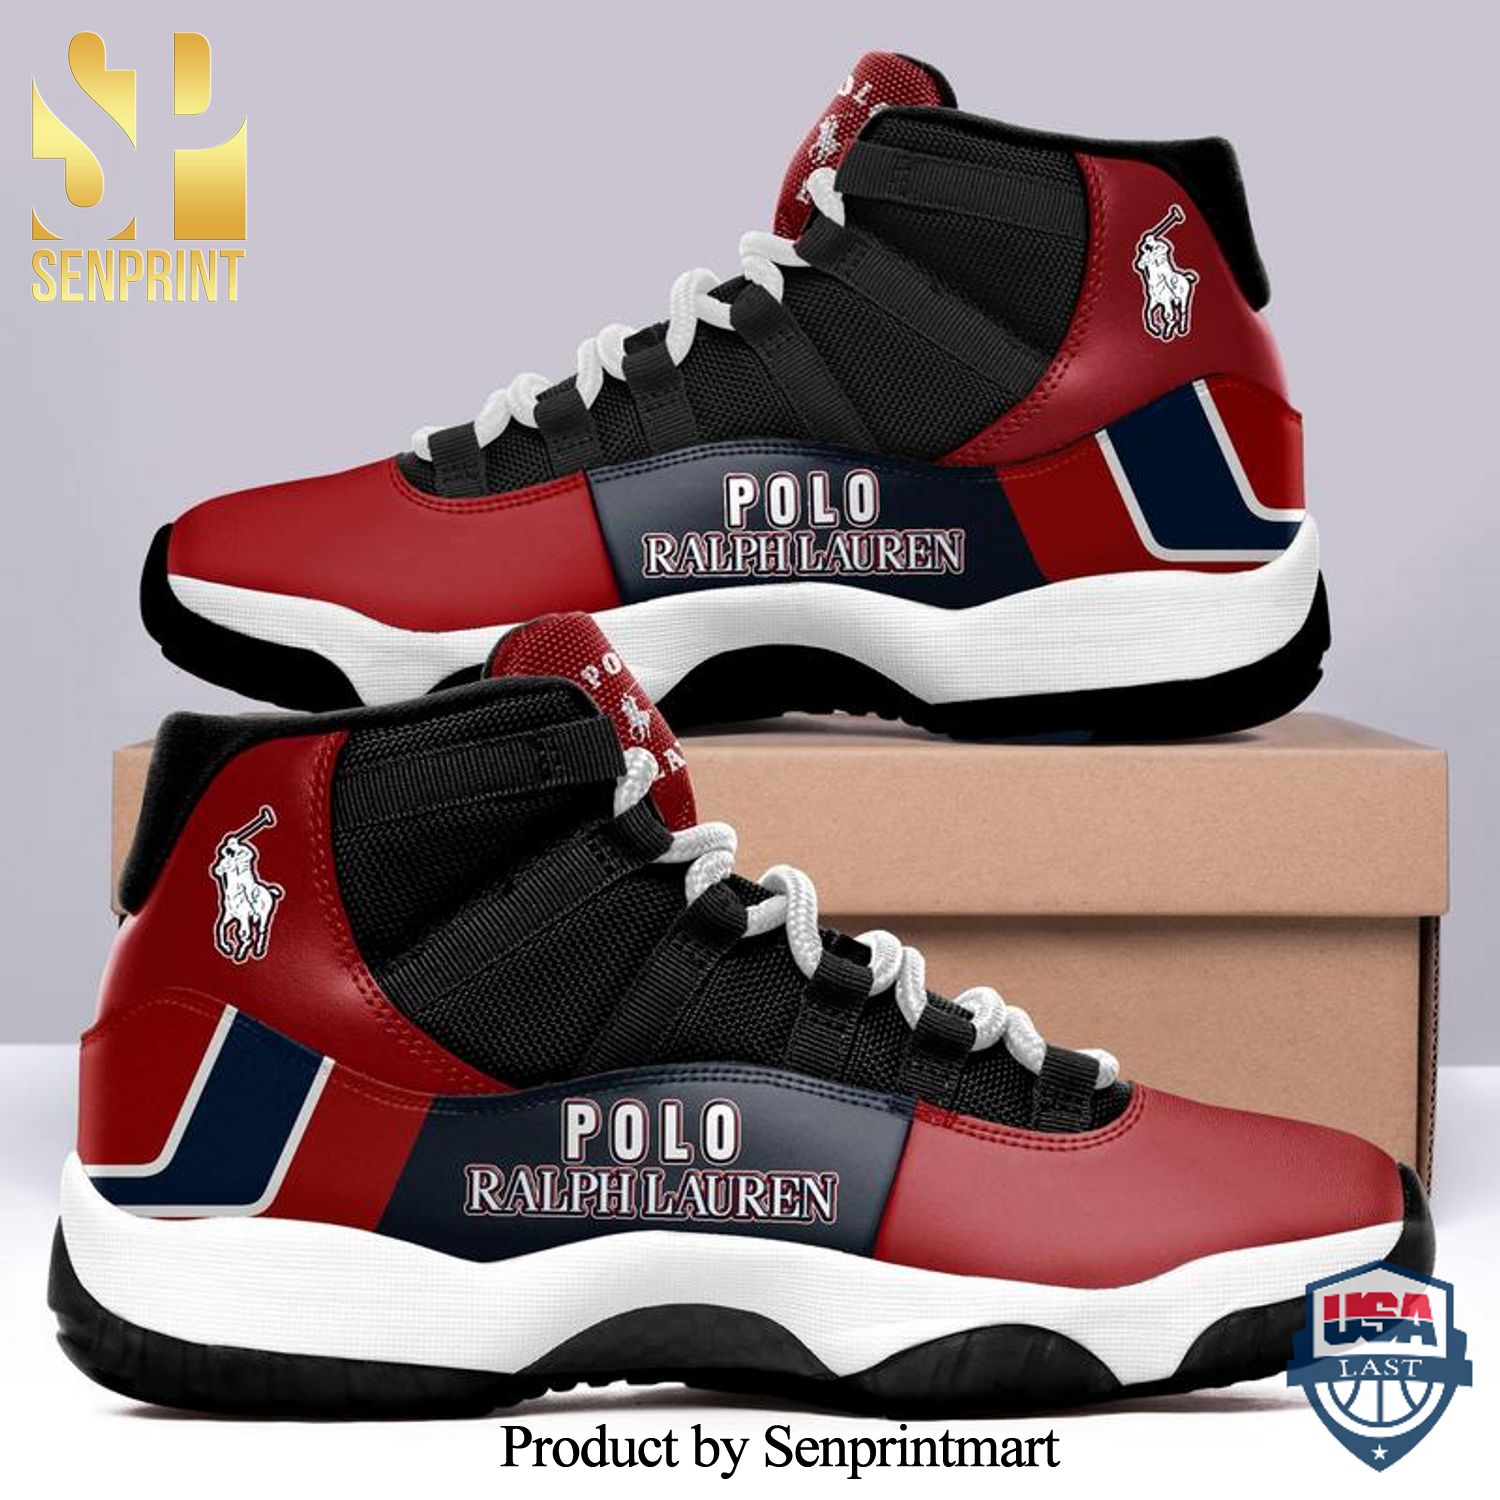 Polo ralph lauren sneaker Cool Style Air Jordan 11